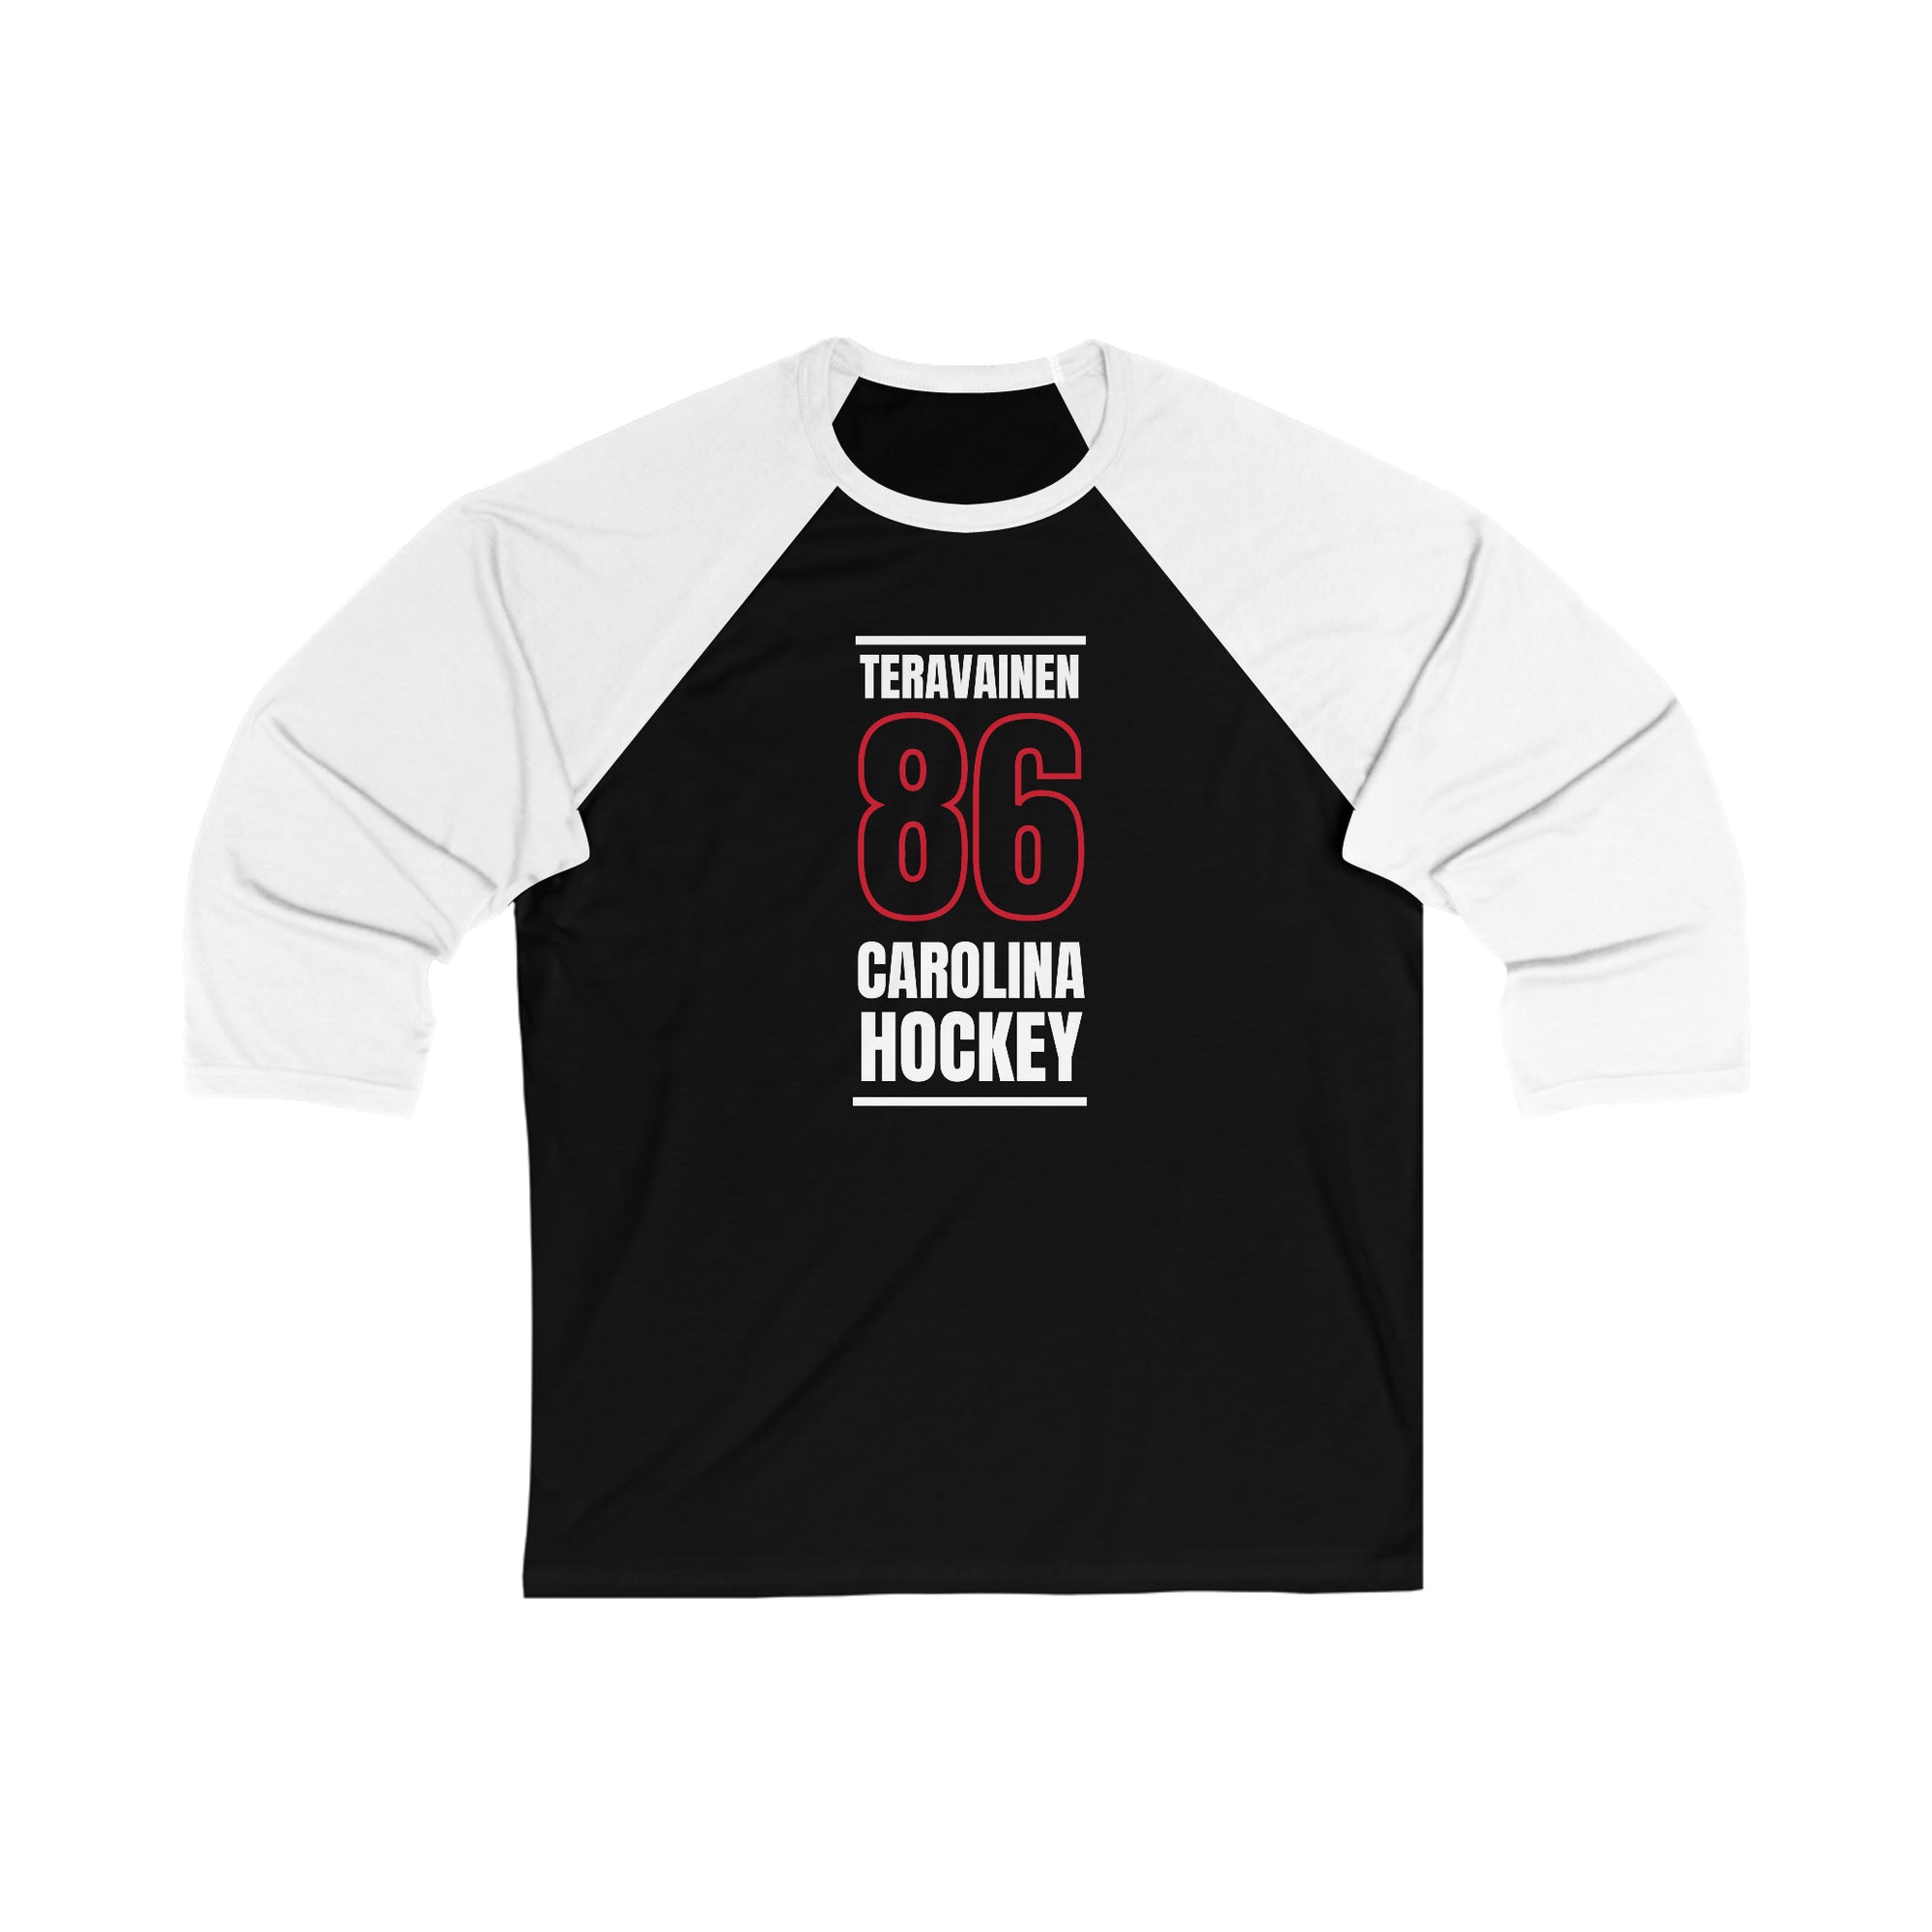 Teravainen 86 Carolina Hockey Black Vertical Design Unisex Tri-Blend 3/4 Sleeve Raglan Baseball Shirt